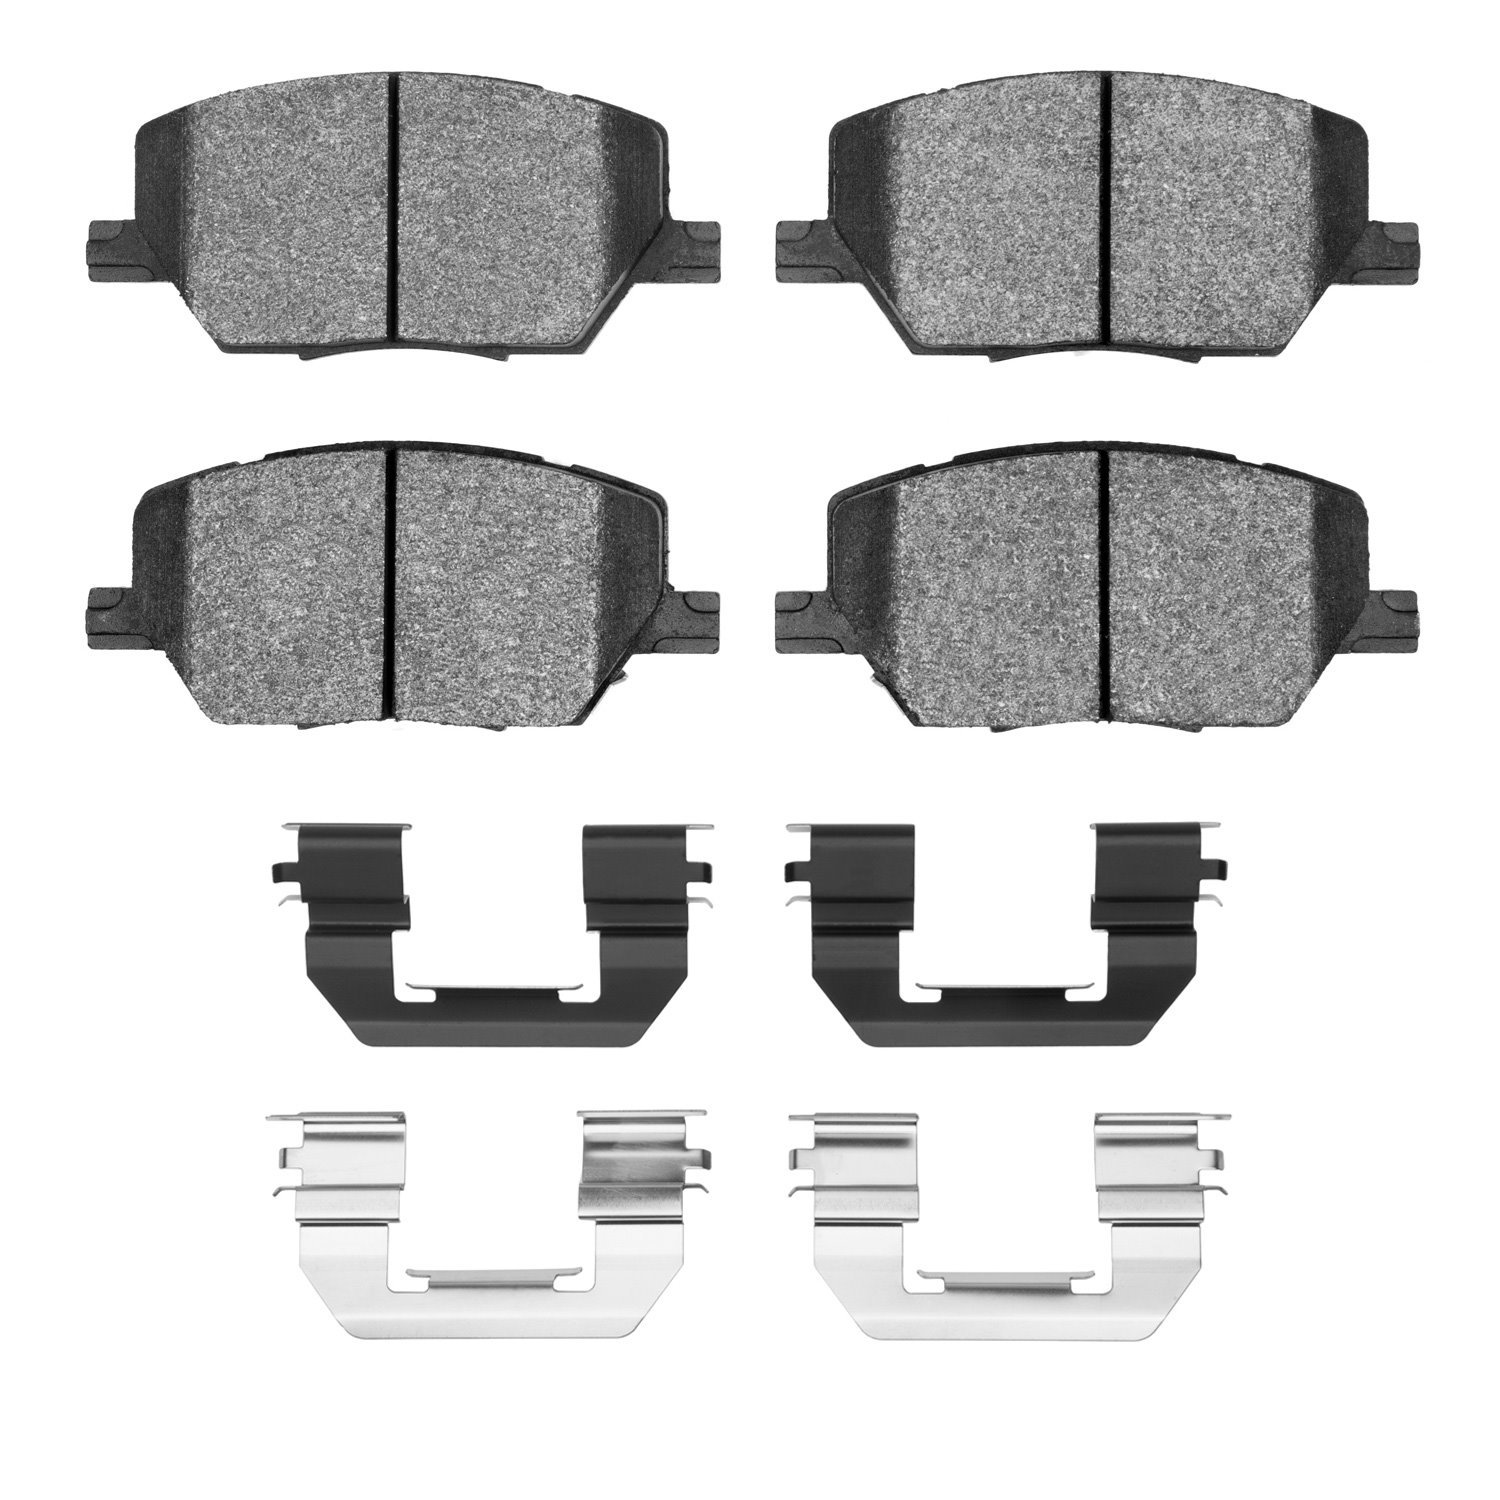 1600-1811-01 5000 Euro Ceramic Brake Pads & Hardware Kit, Fits Select Mopar, Position: Front